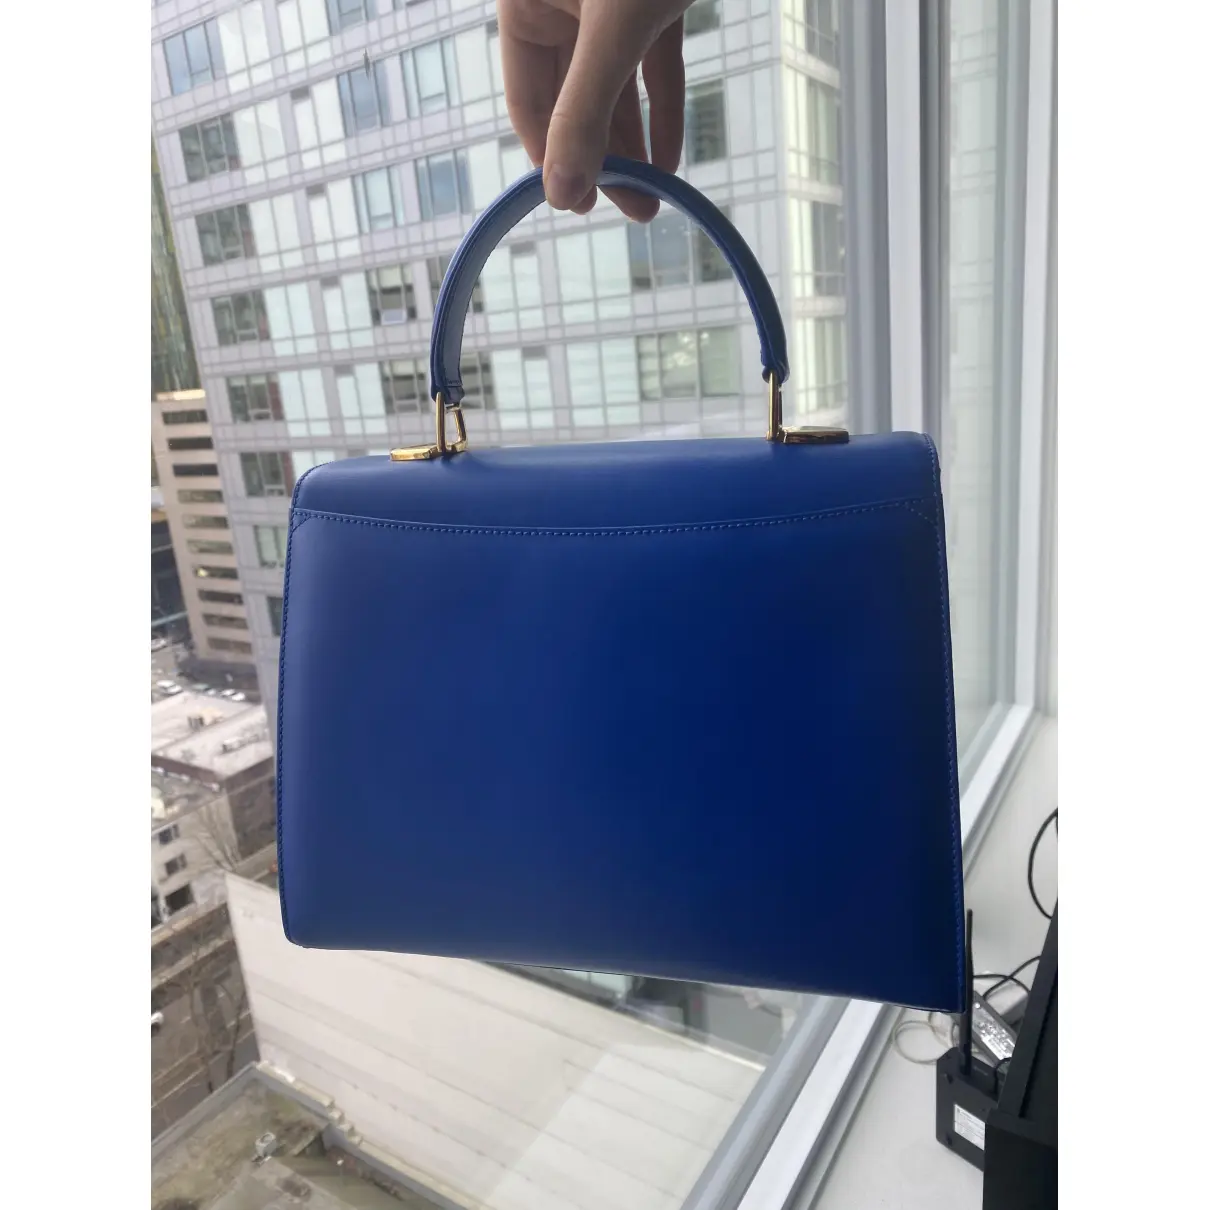 Buy Gianfranco Lotti Leather handbag online - Vintage